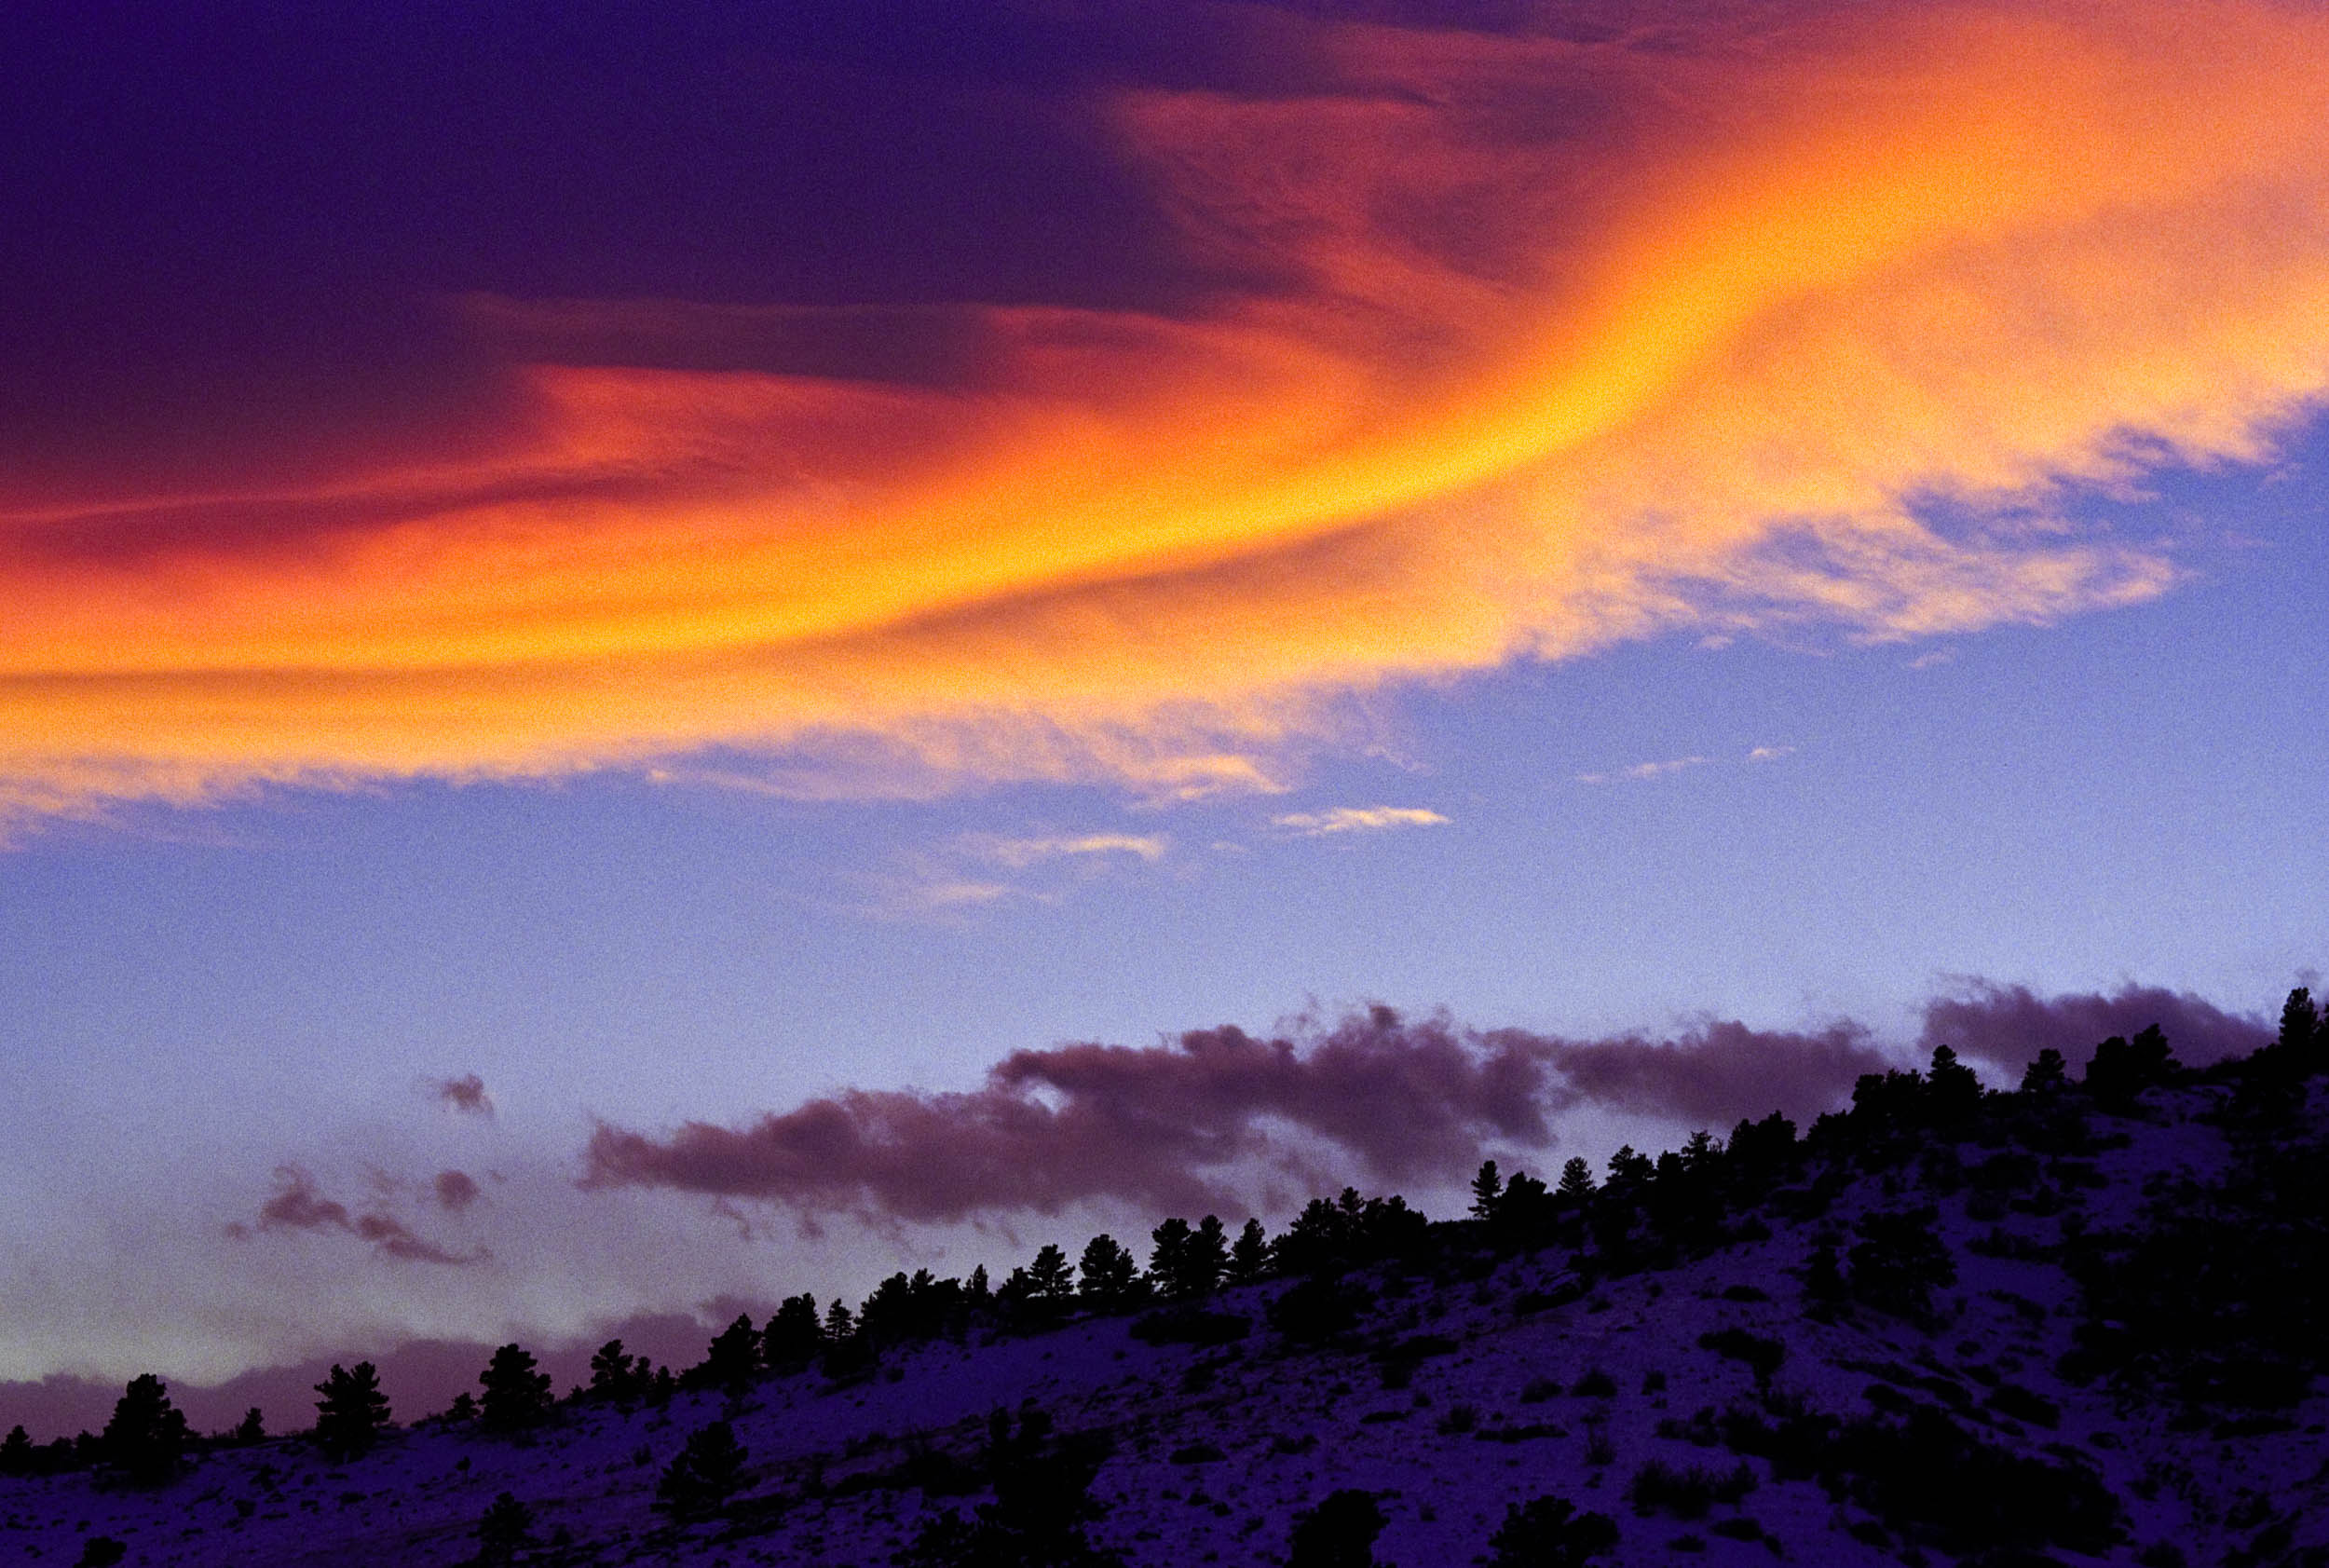  Lenticular Clouds at Sunset Near Boulder, CO 1993 